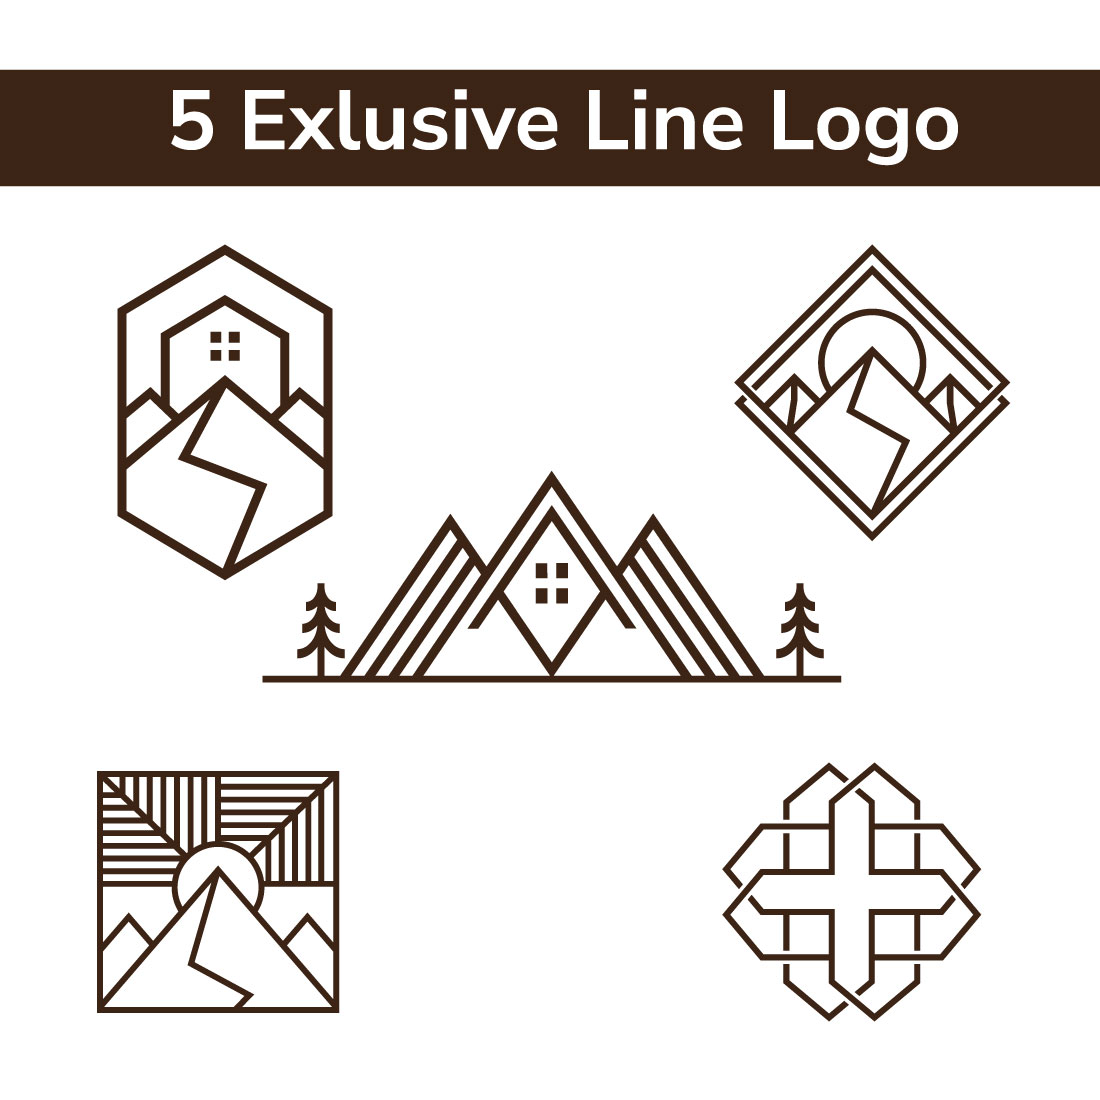 Exclusive Line Logo Design cover image.